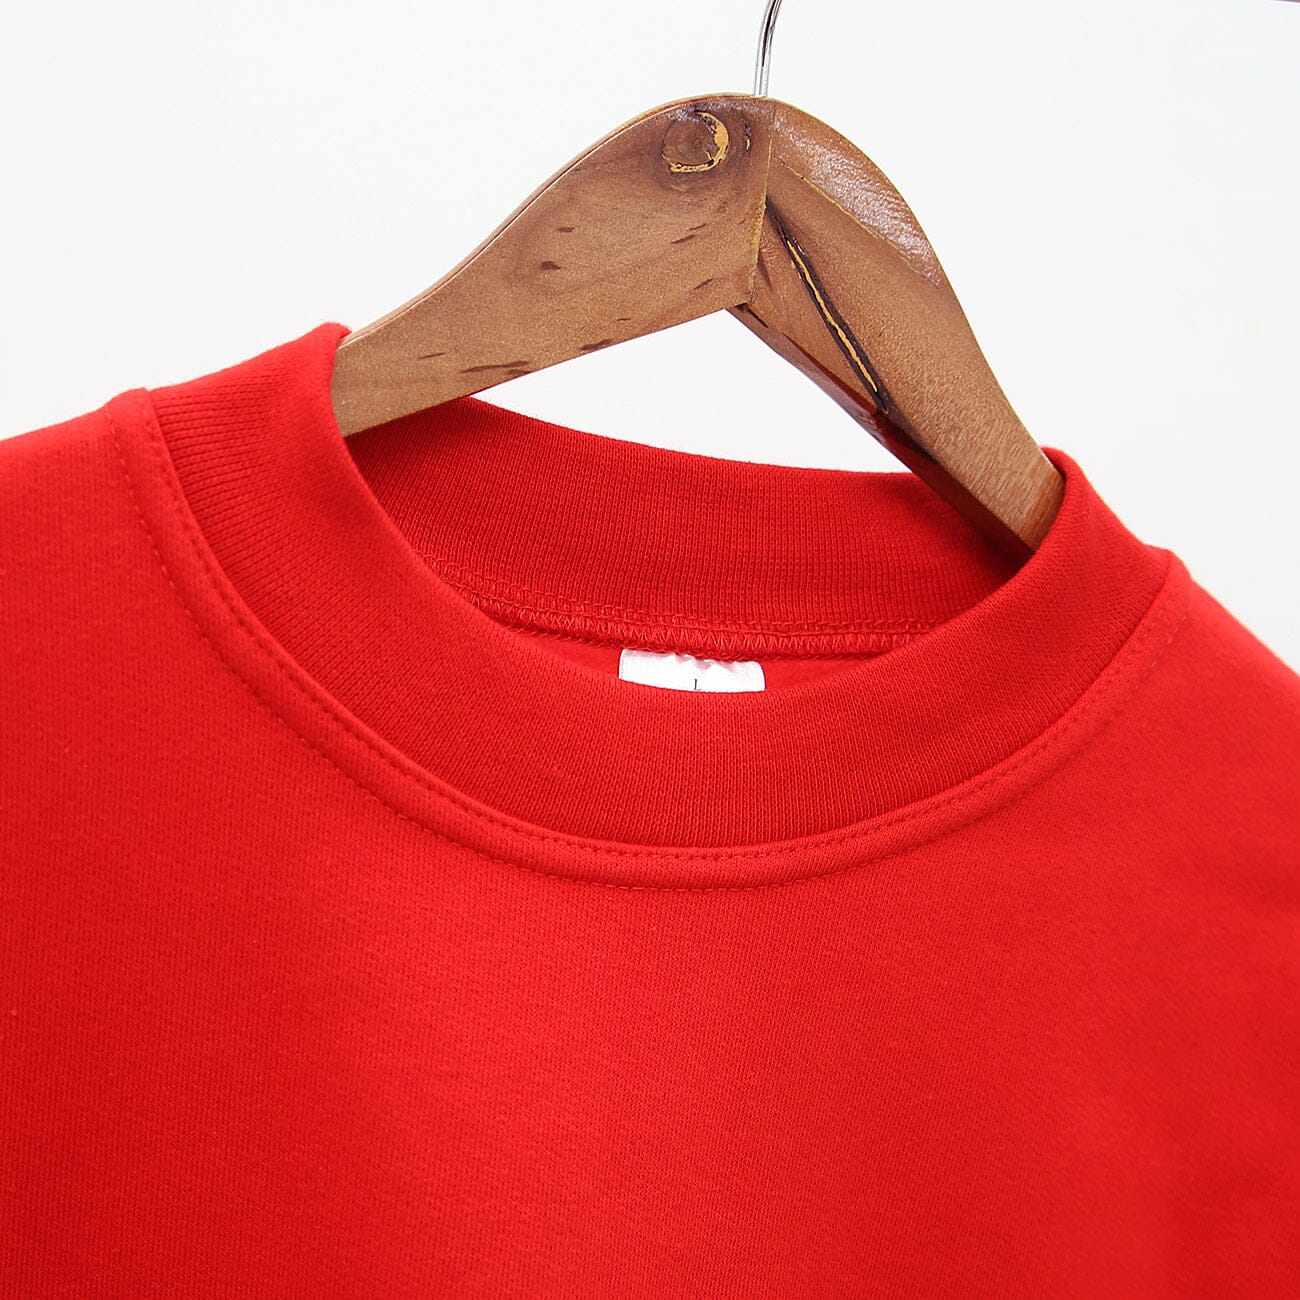 Premium Quality Basic Soft Fleece Sweatshirt For Unisex (120151)